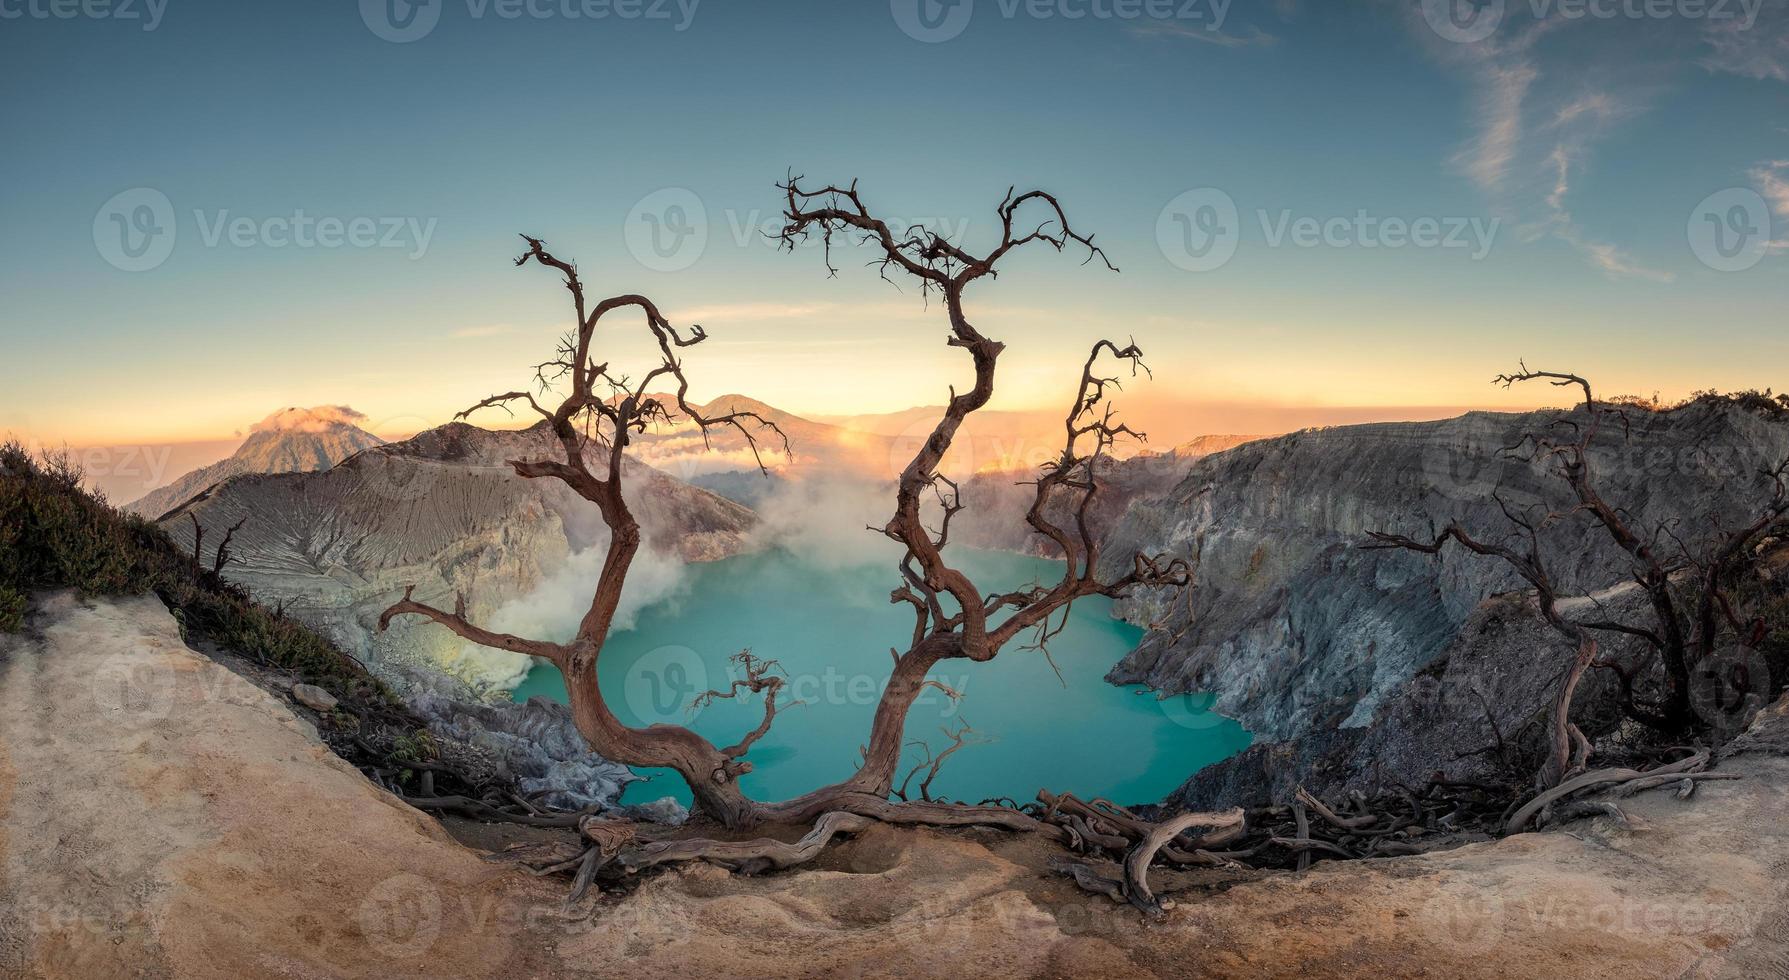 getrockneter Baum auf aktivem Vulkankrater mit türkisfarbenem See im Morgengrauen foto